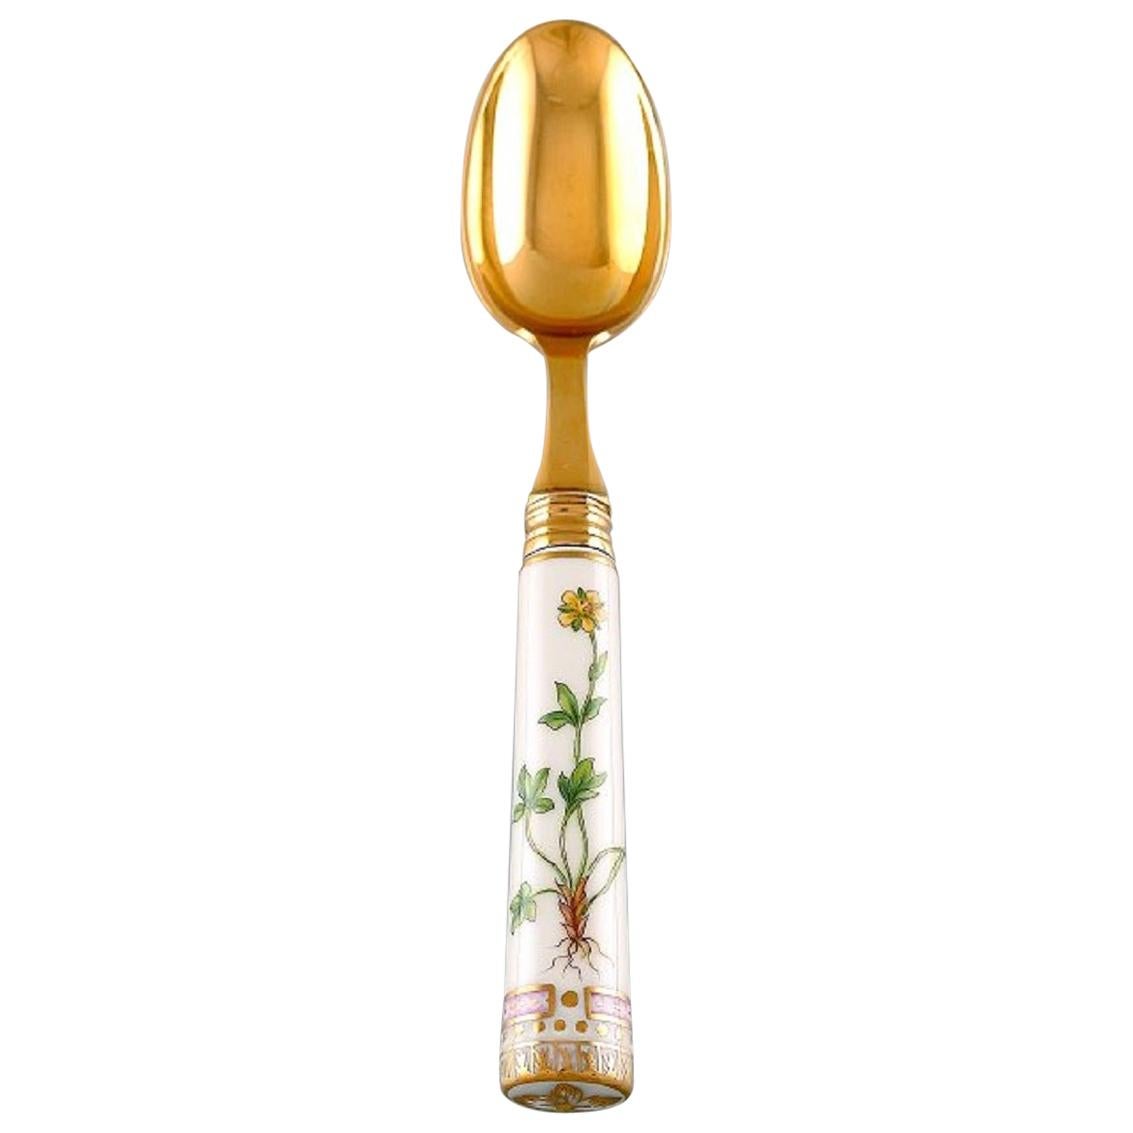 Michelsen for Royal Copenhagen, "Flora Danica" Dinner Spoon, Gold-Plated Silver